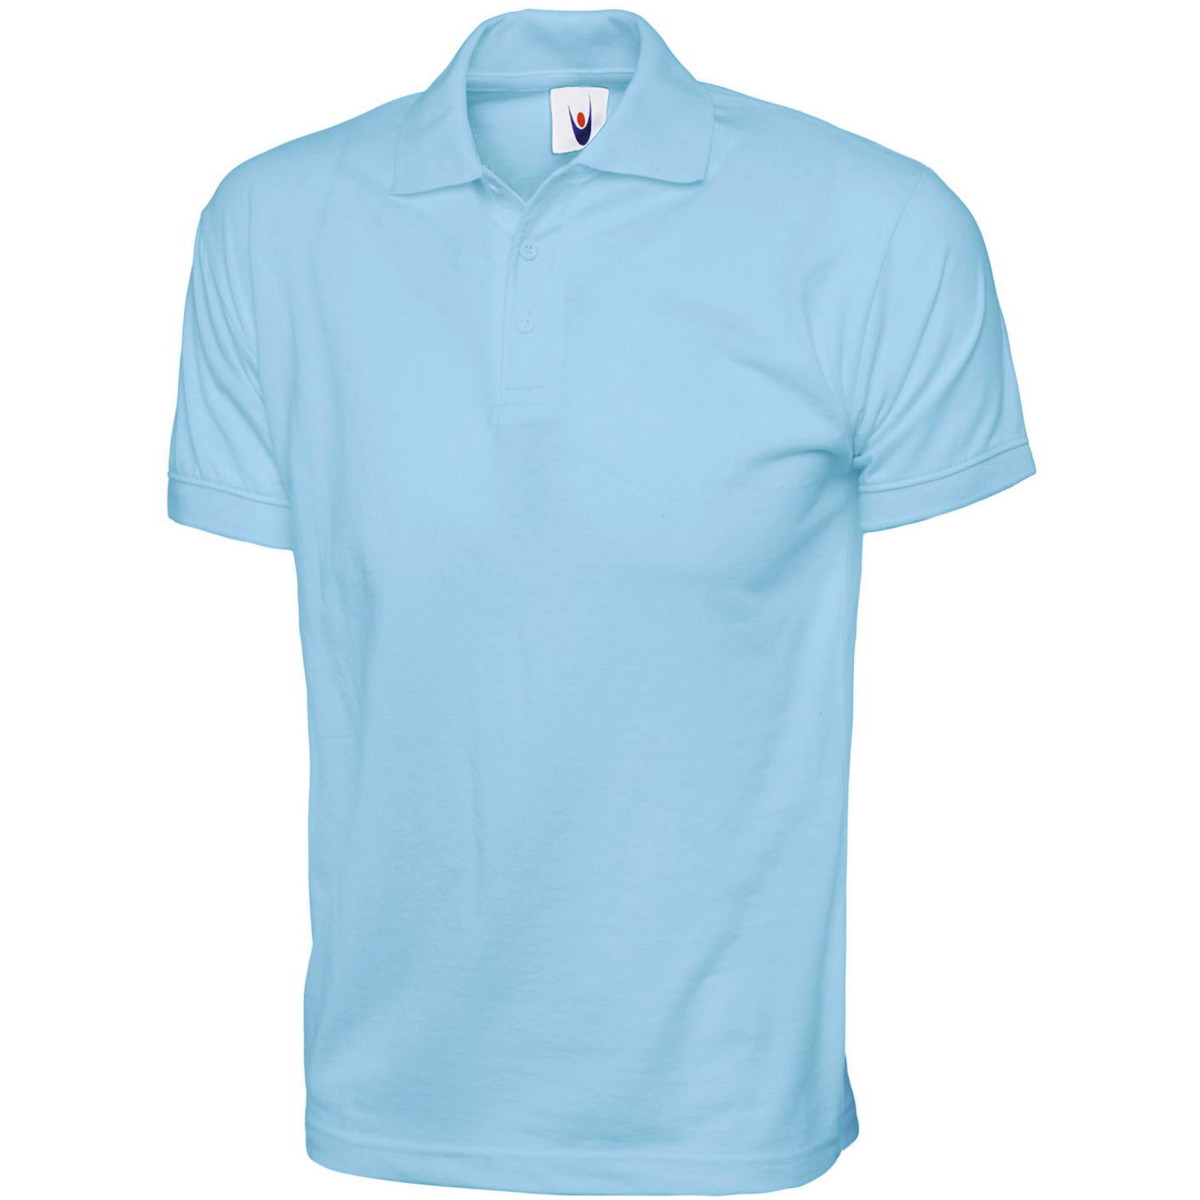 Uneek Polo Shirt Jersey - Uneek Polo Shirt JerseyGarment Fit: Regular